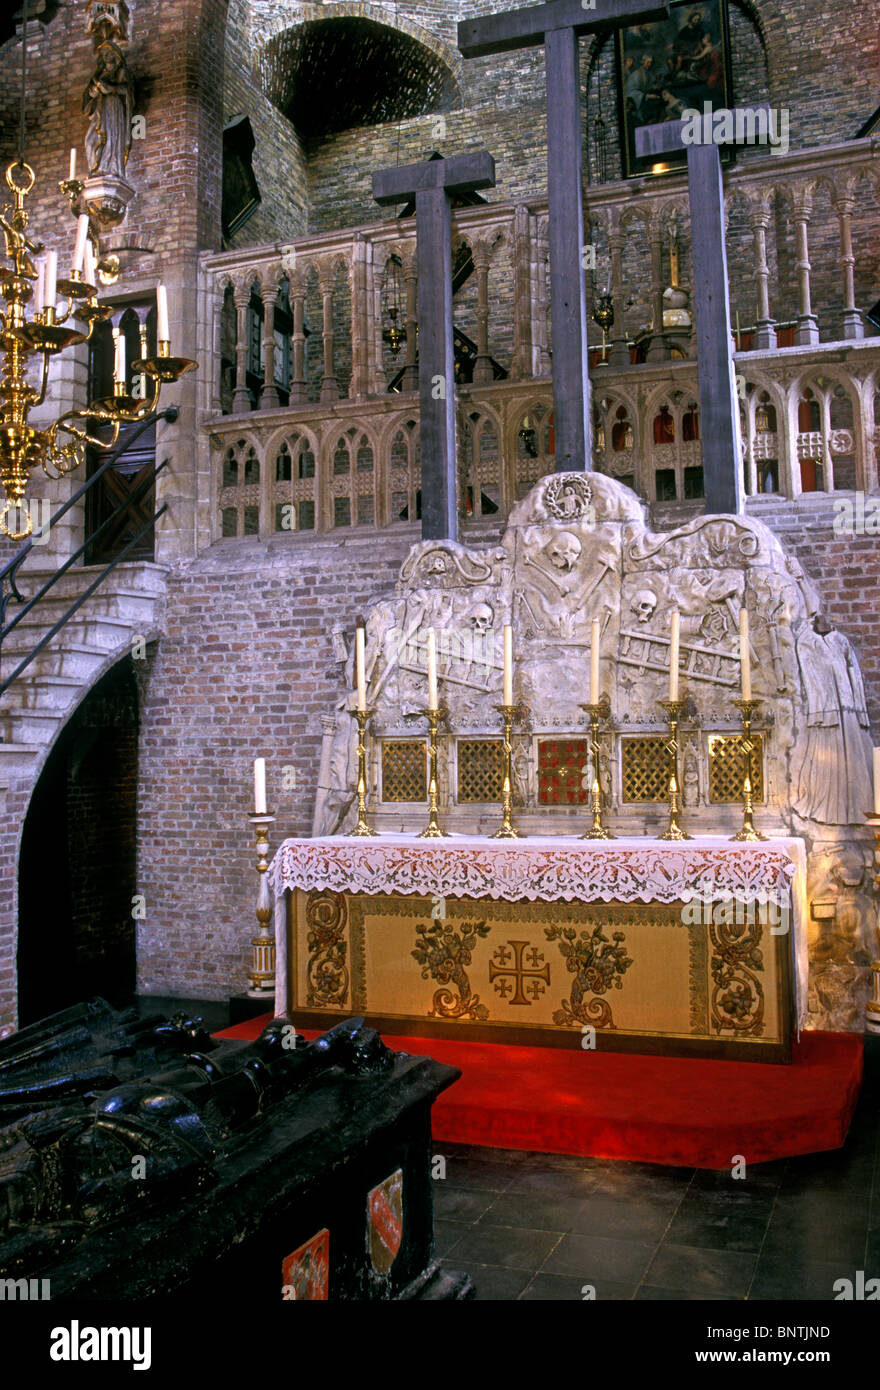 Altar, Altar, Jerusalem, Kirche, Jeruzalemkerk, 15. Jahrhundert Kirche, die römisch-katholische Kirche, Stadt Brügge, Westflandern, Belgien Stockfoto